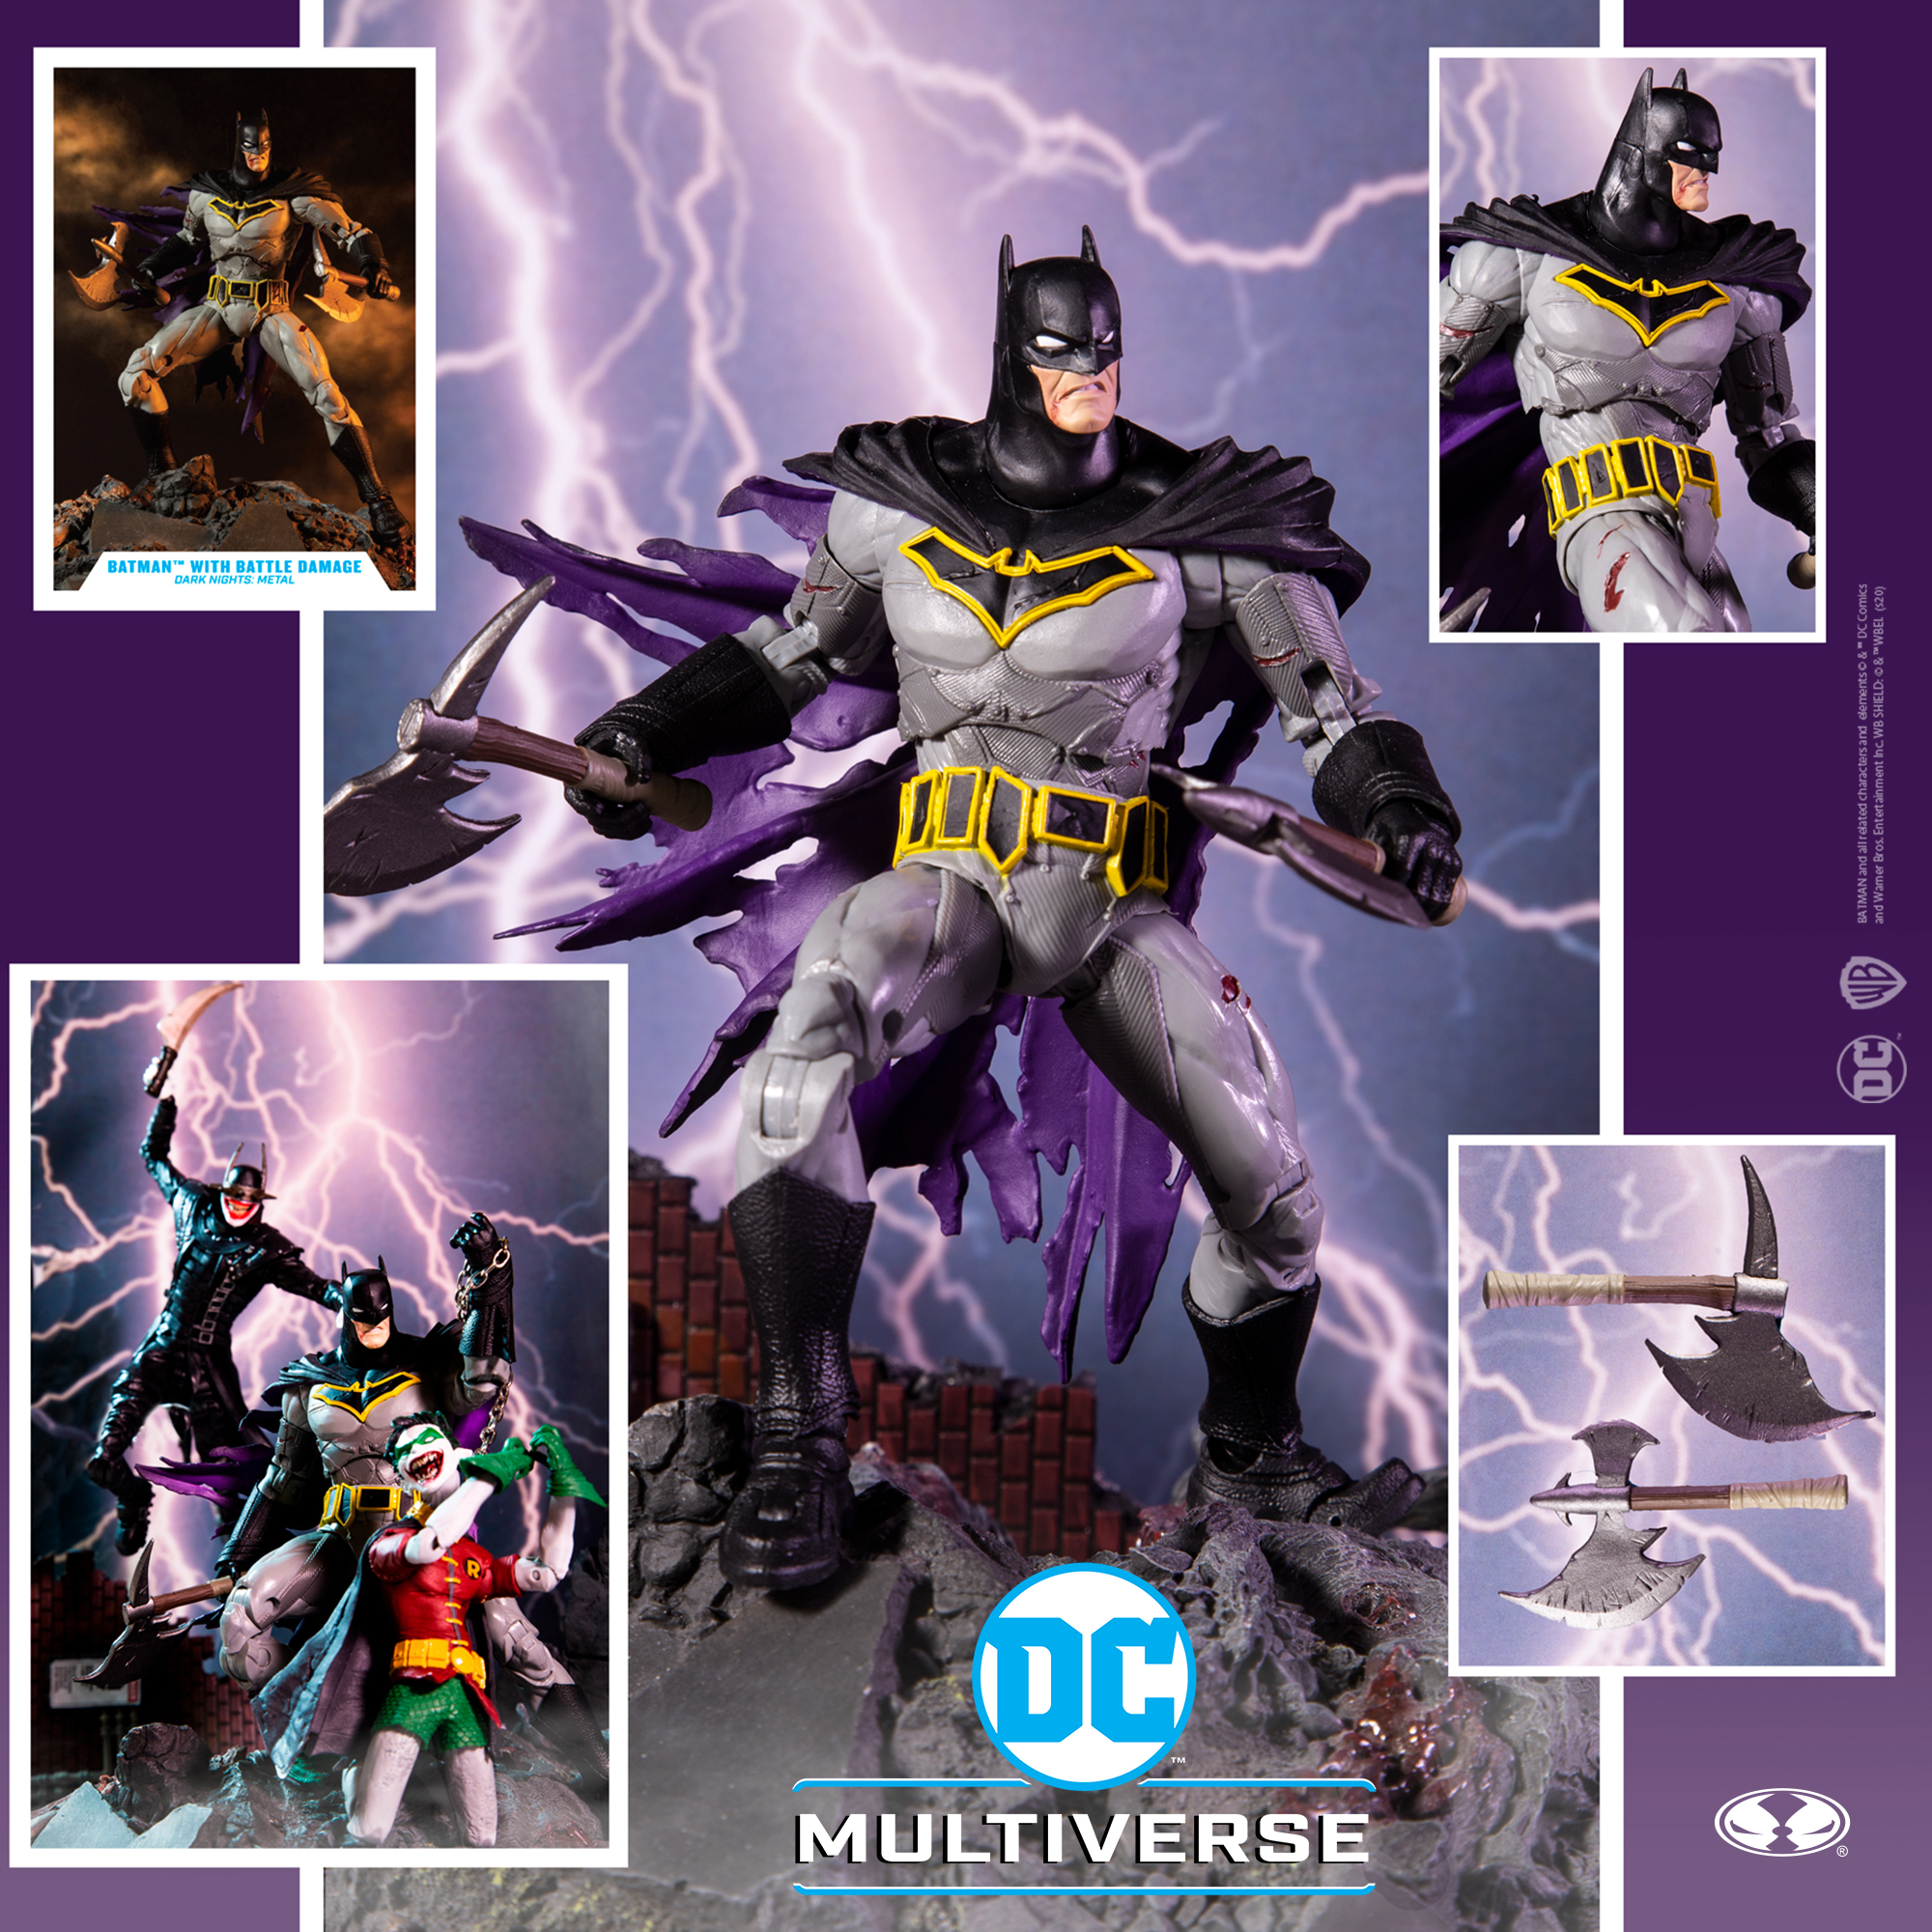 McFarlane DC Multiversum dunkle Nächte Metall-Batman mit Battle Damage lagernd